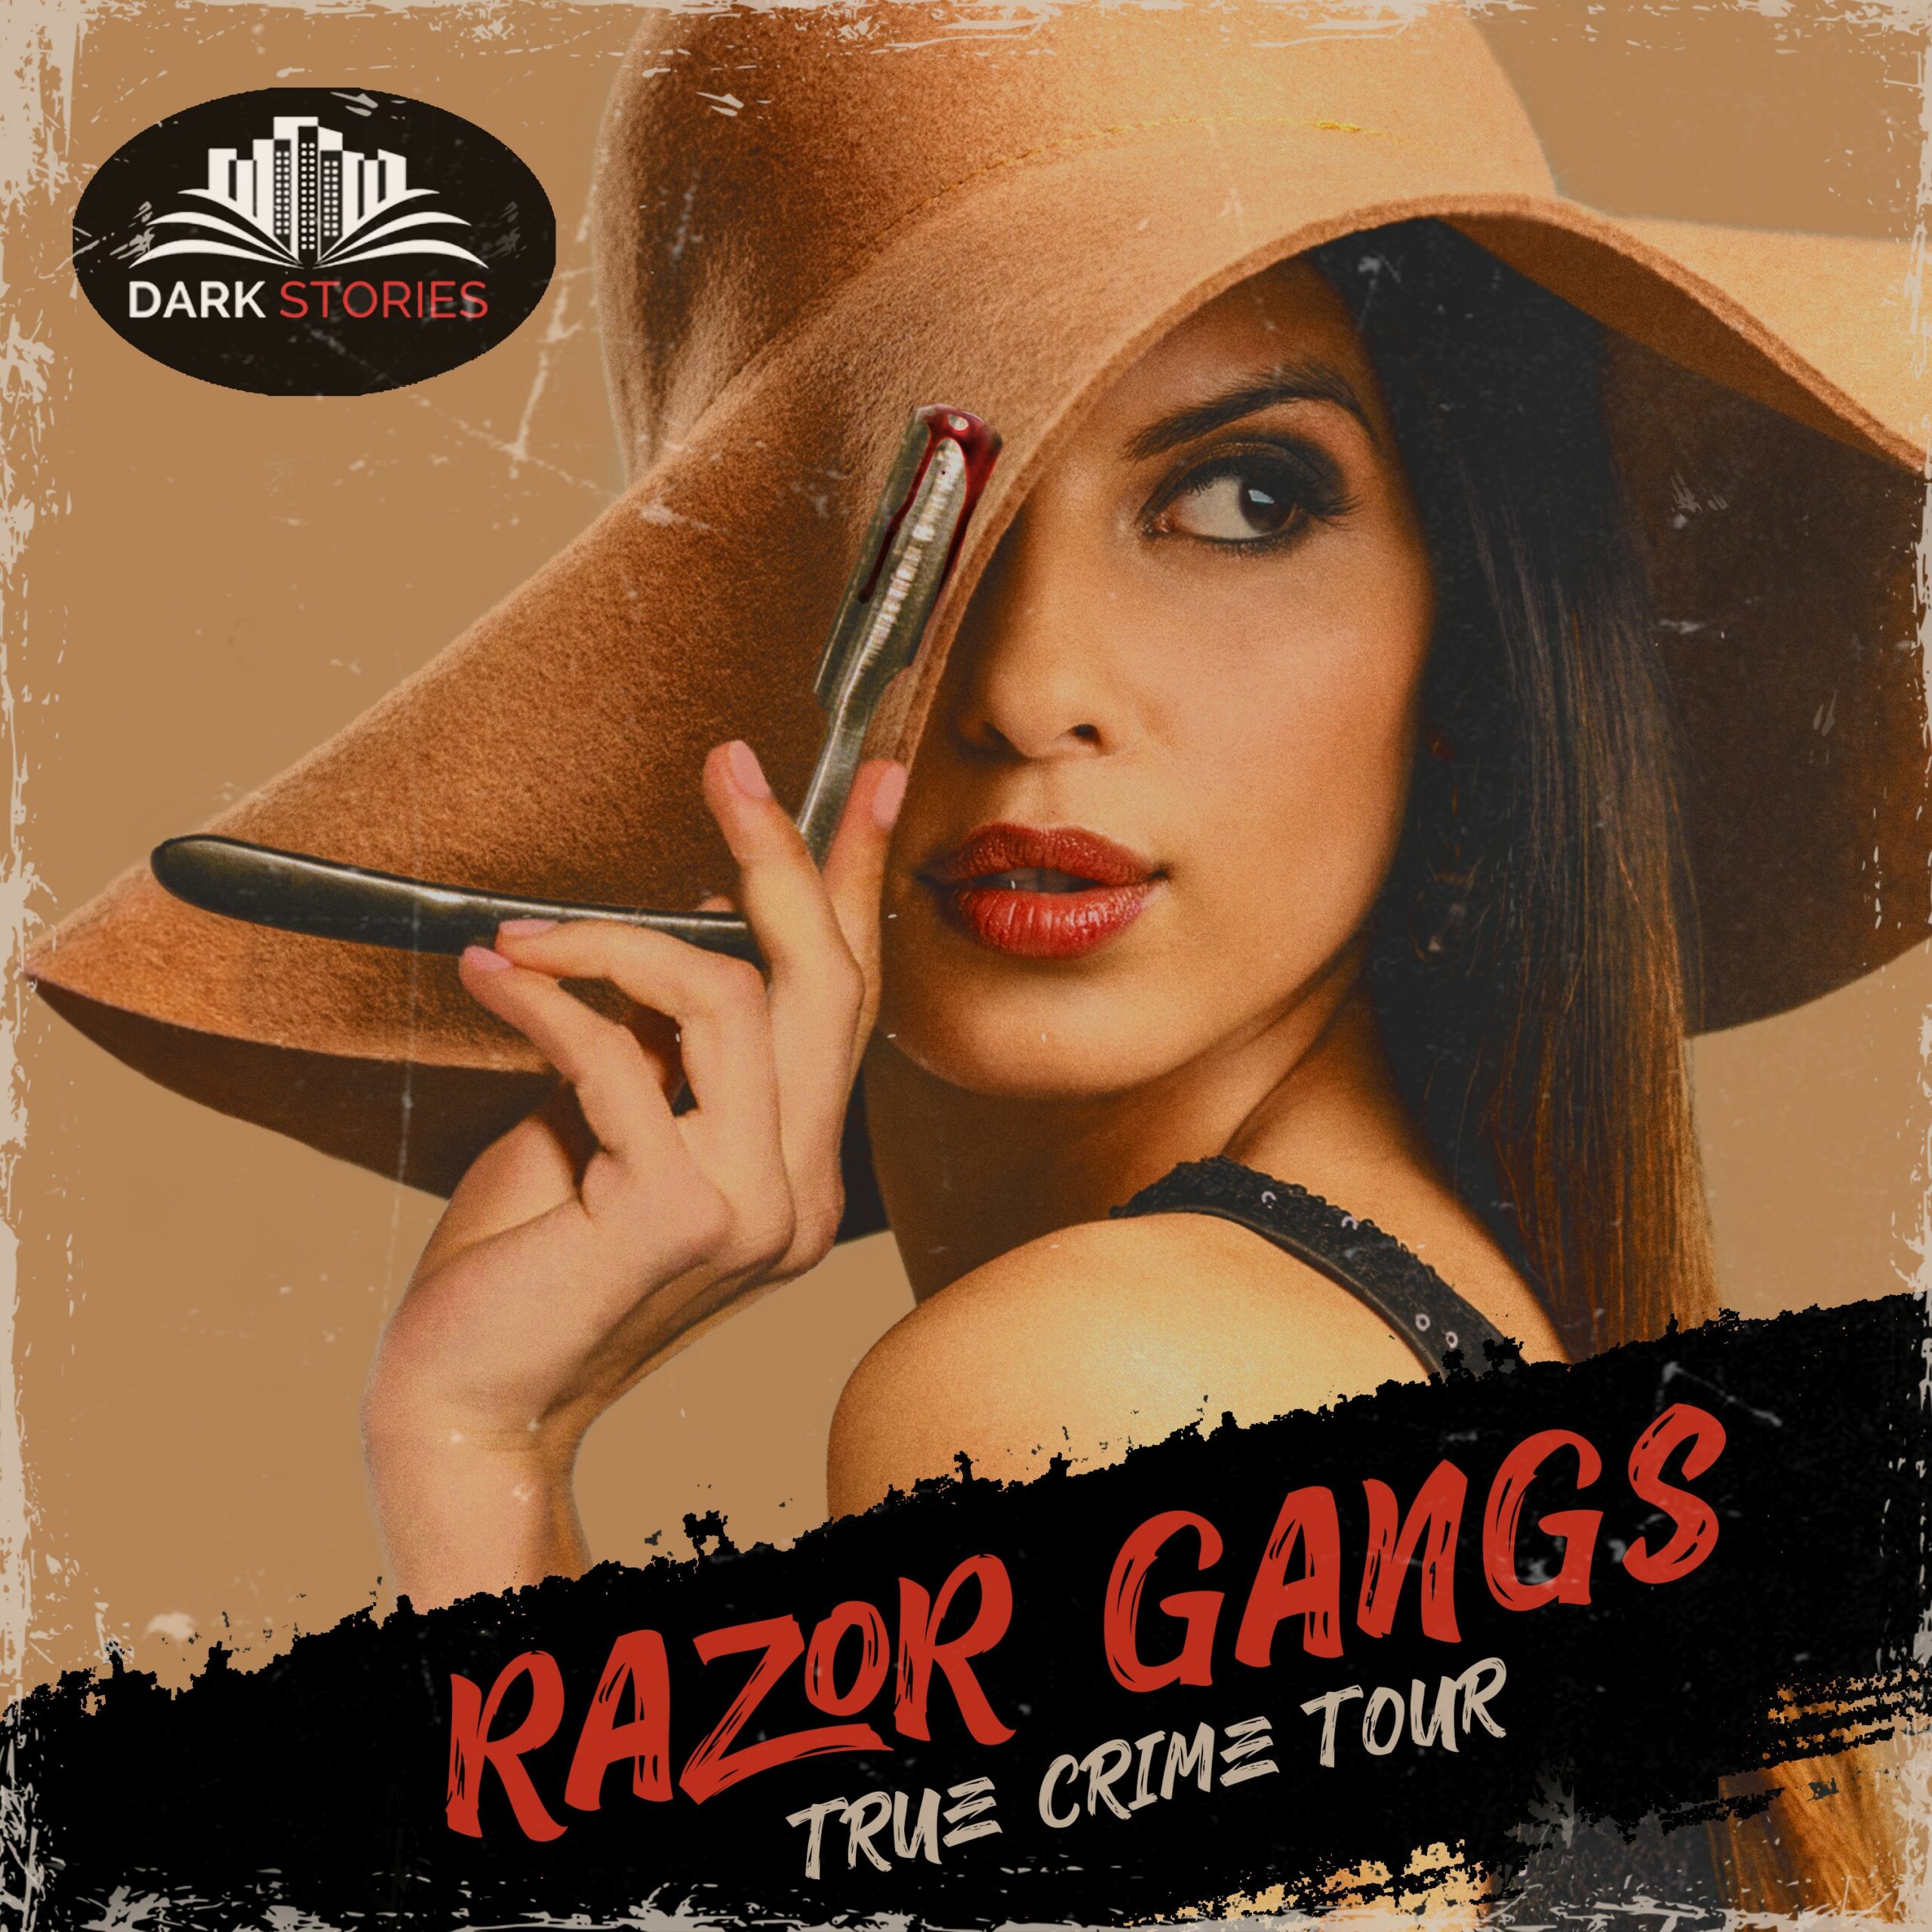 Sydney’s – Razor Gang True Crime Tour